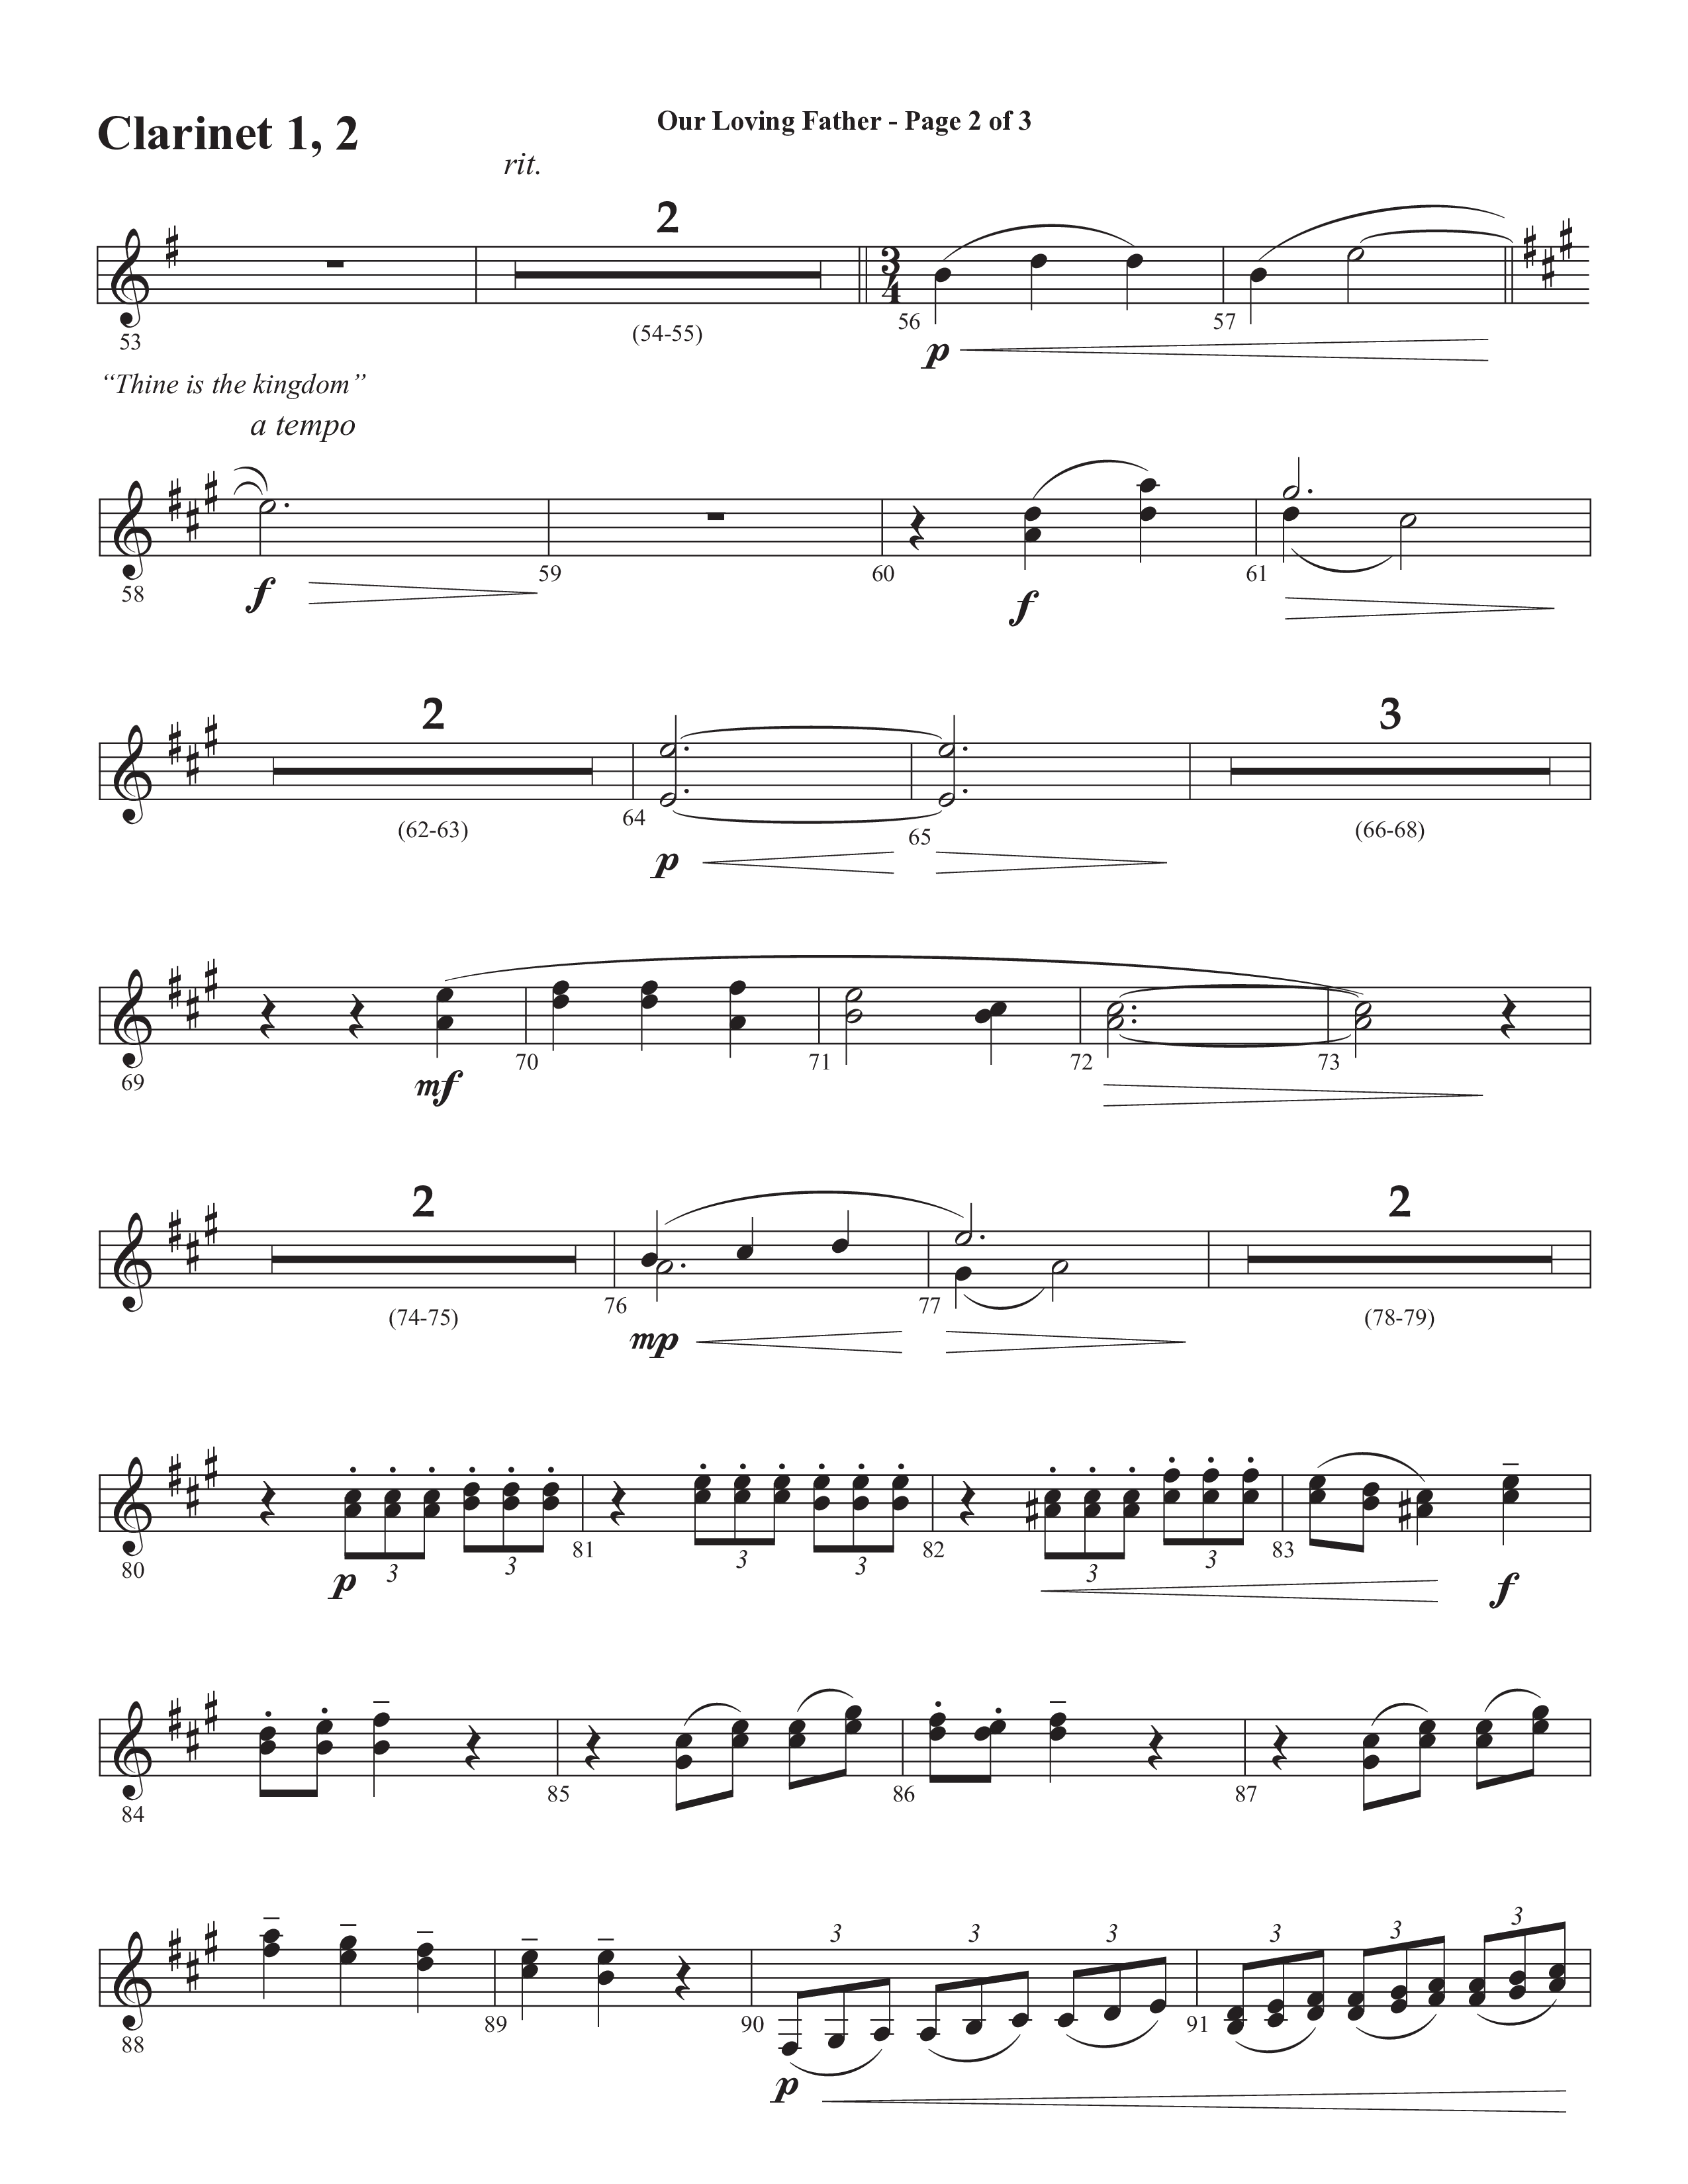 Our Loving Father (Choral Anthem SATB) Clarinet 1/2 (Semsen Music / Arr. Phillip Keveren)